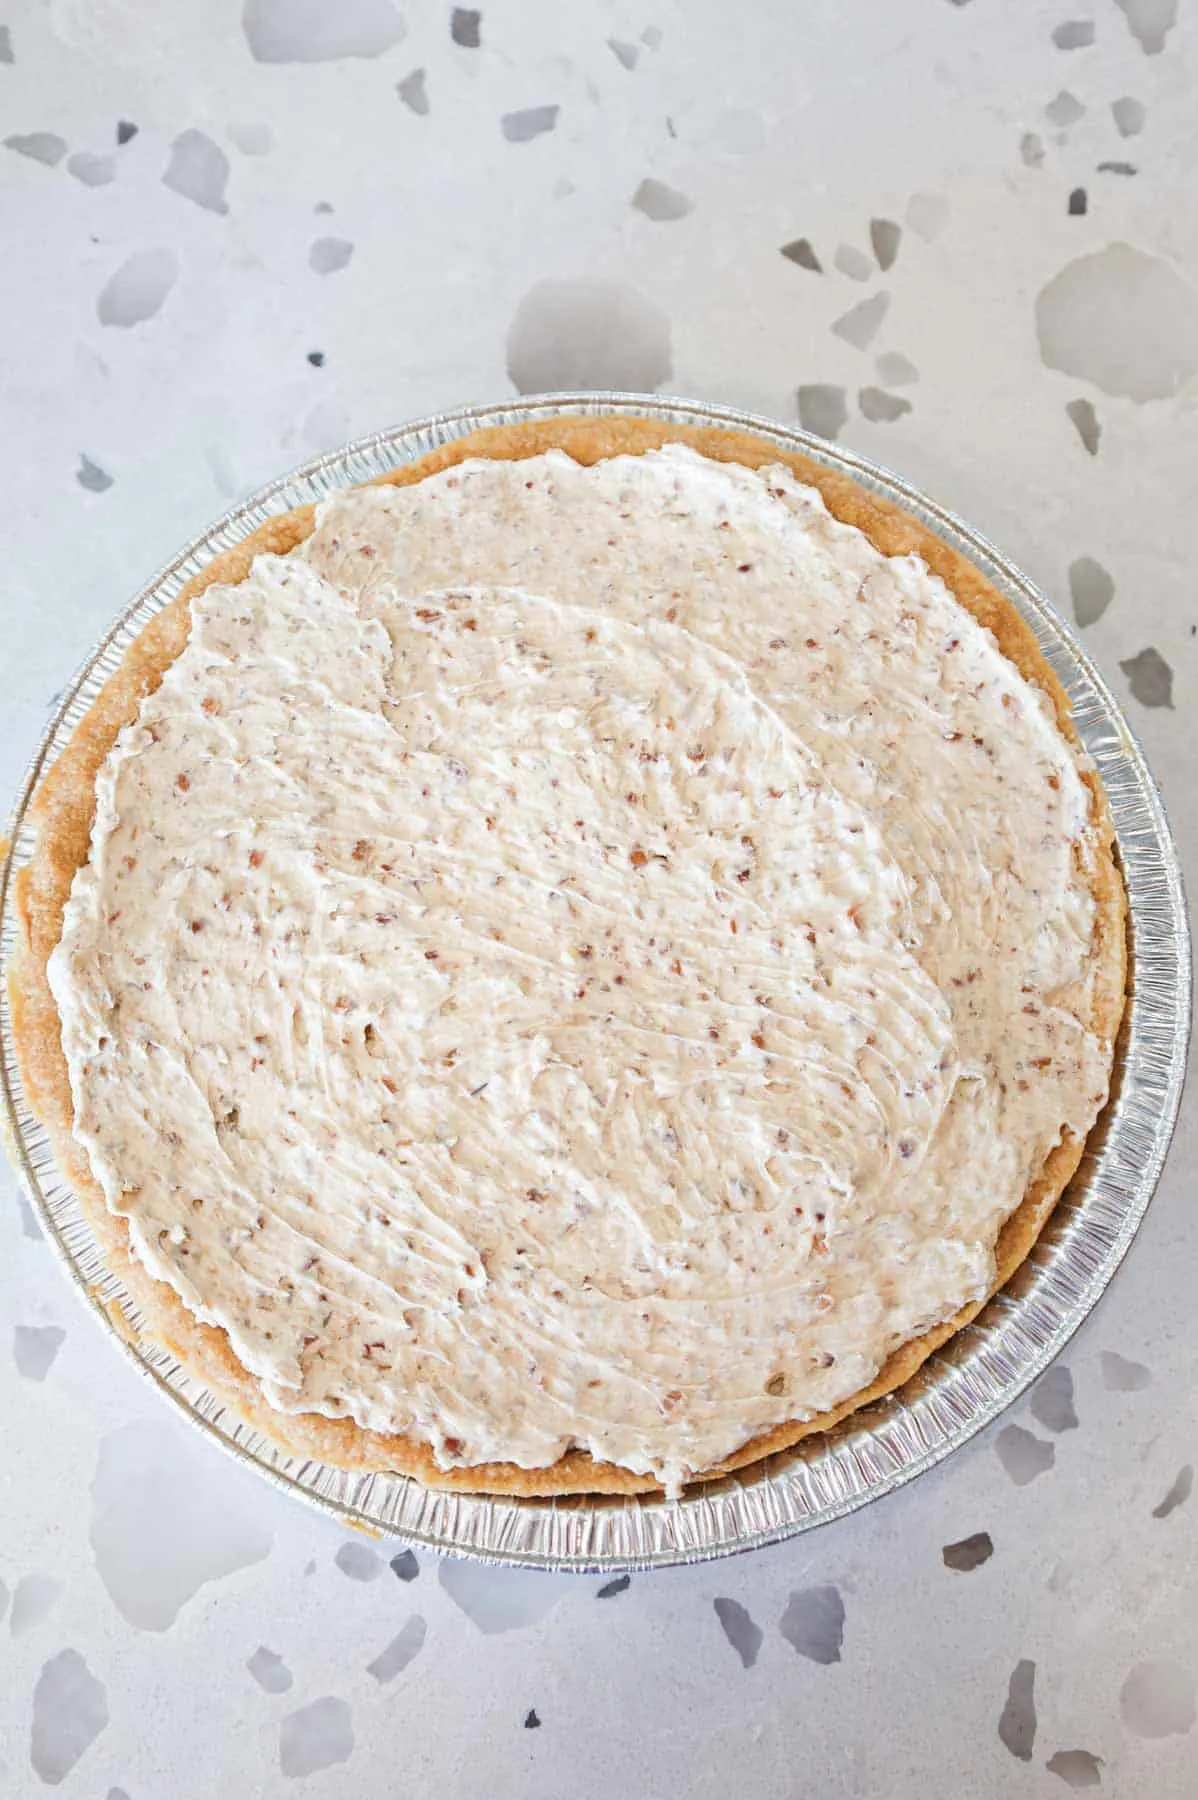 pecan cream filling in a baked pie crust